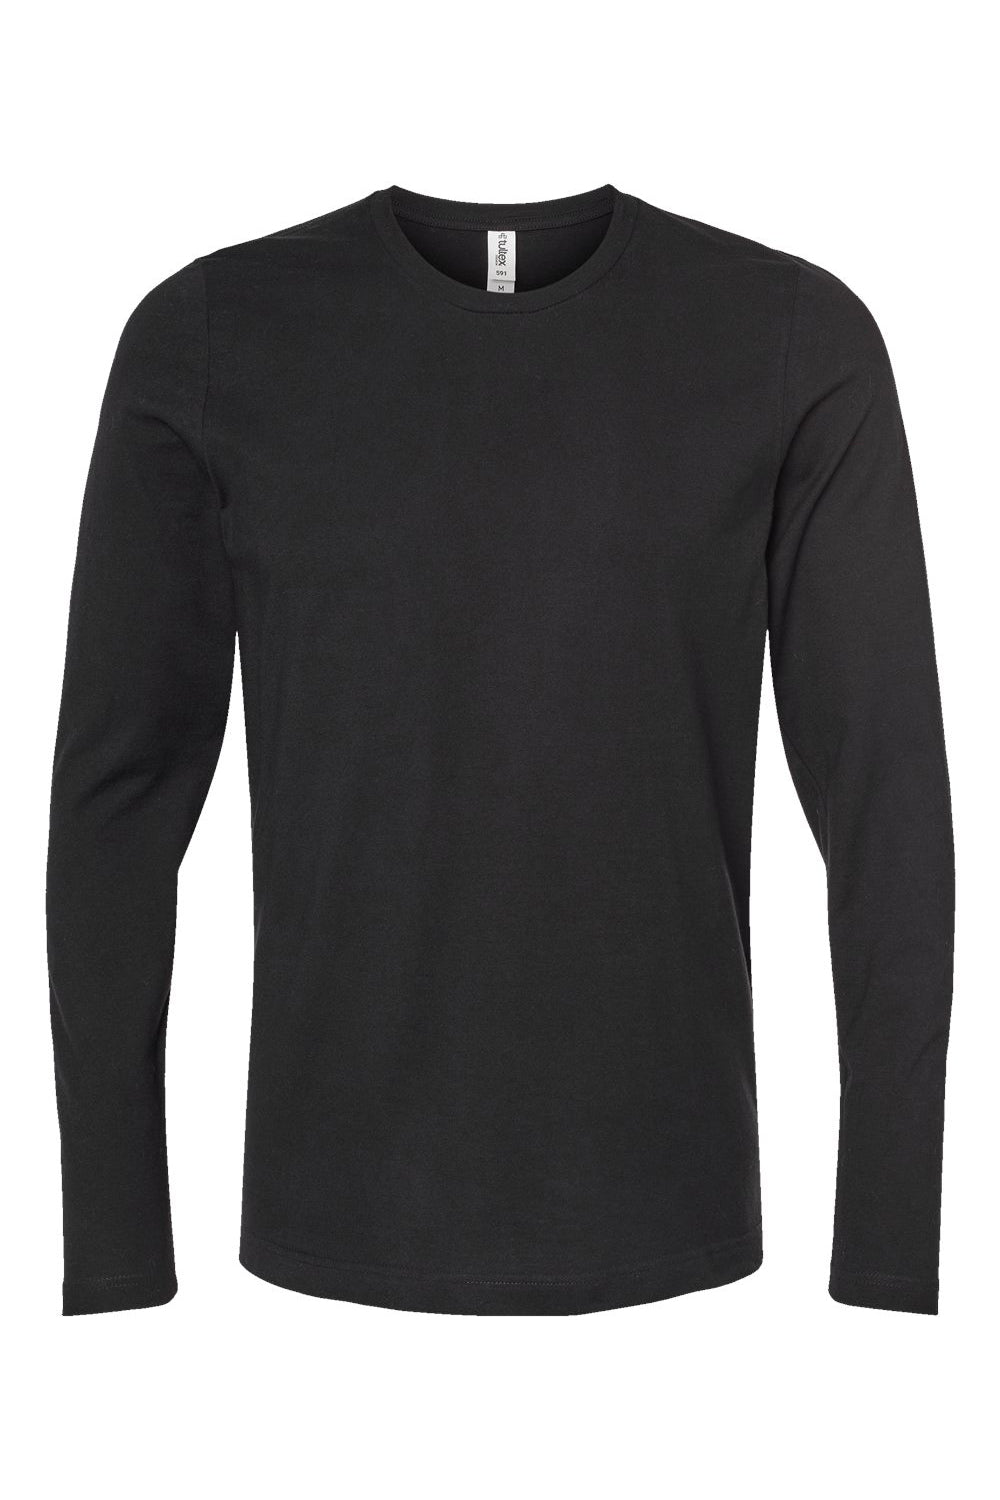 Tultex 591 Mens Premium Long Sleeve Crewneck T-Shirt Black Flat Front